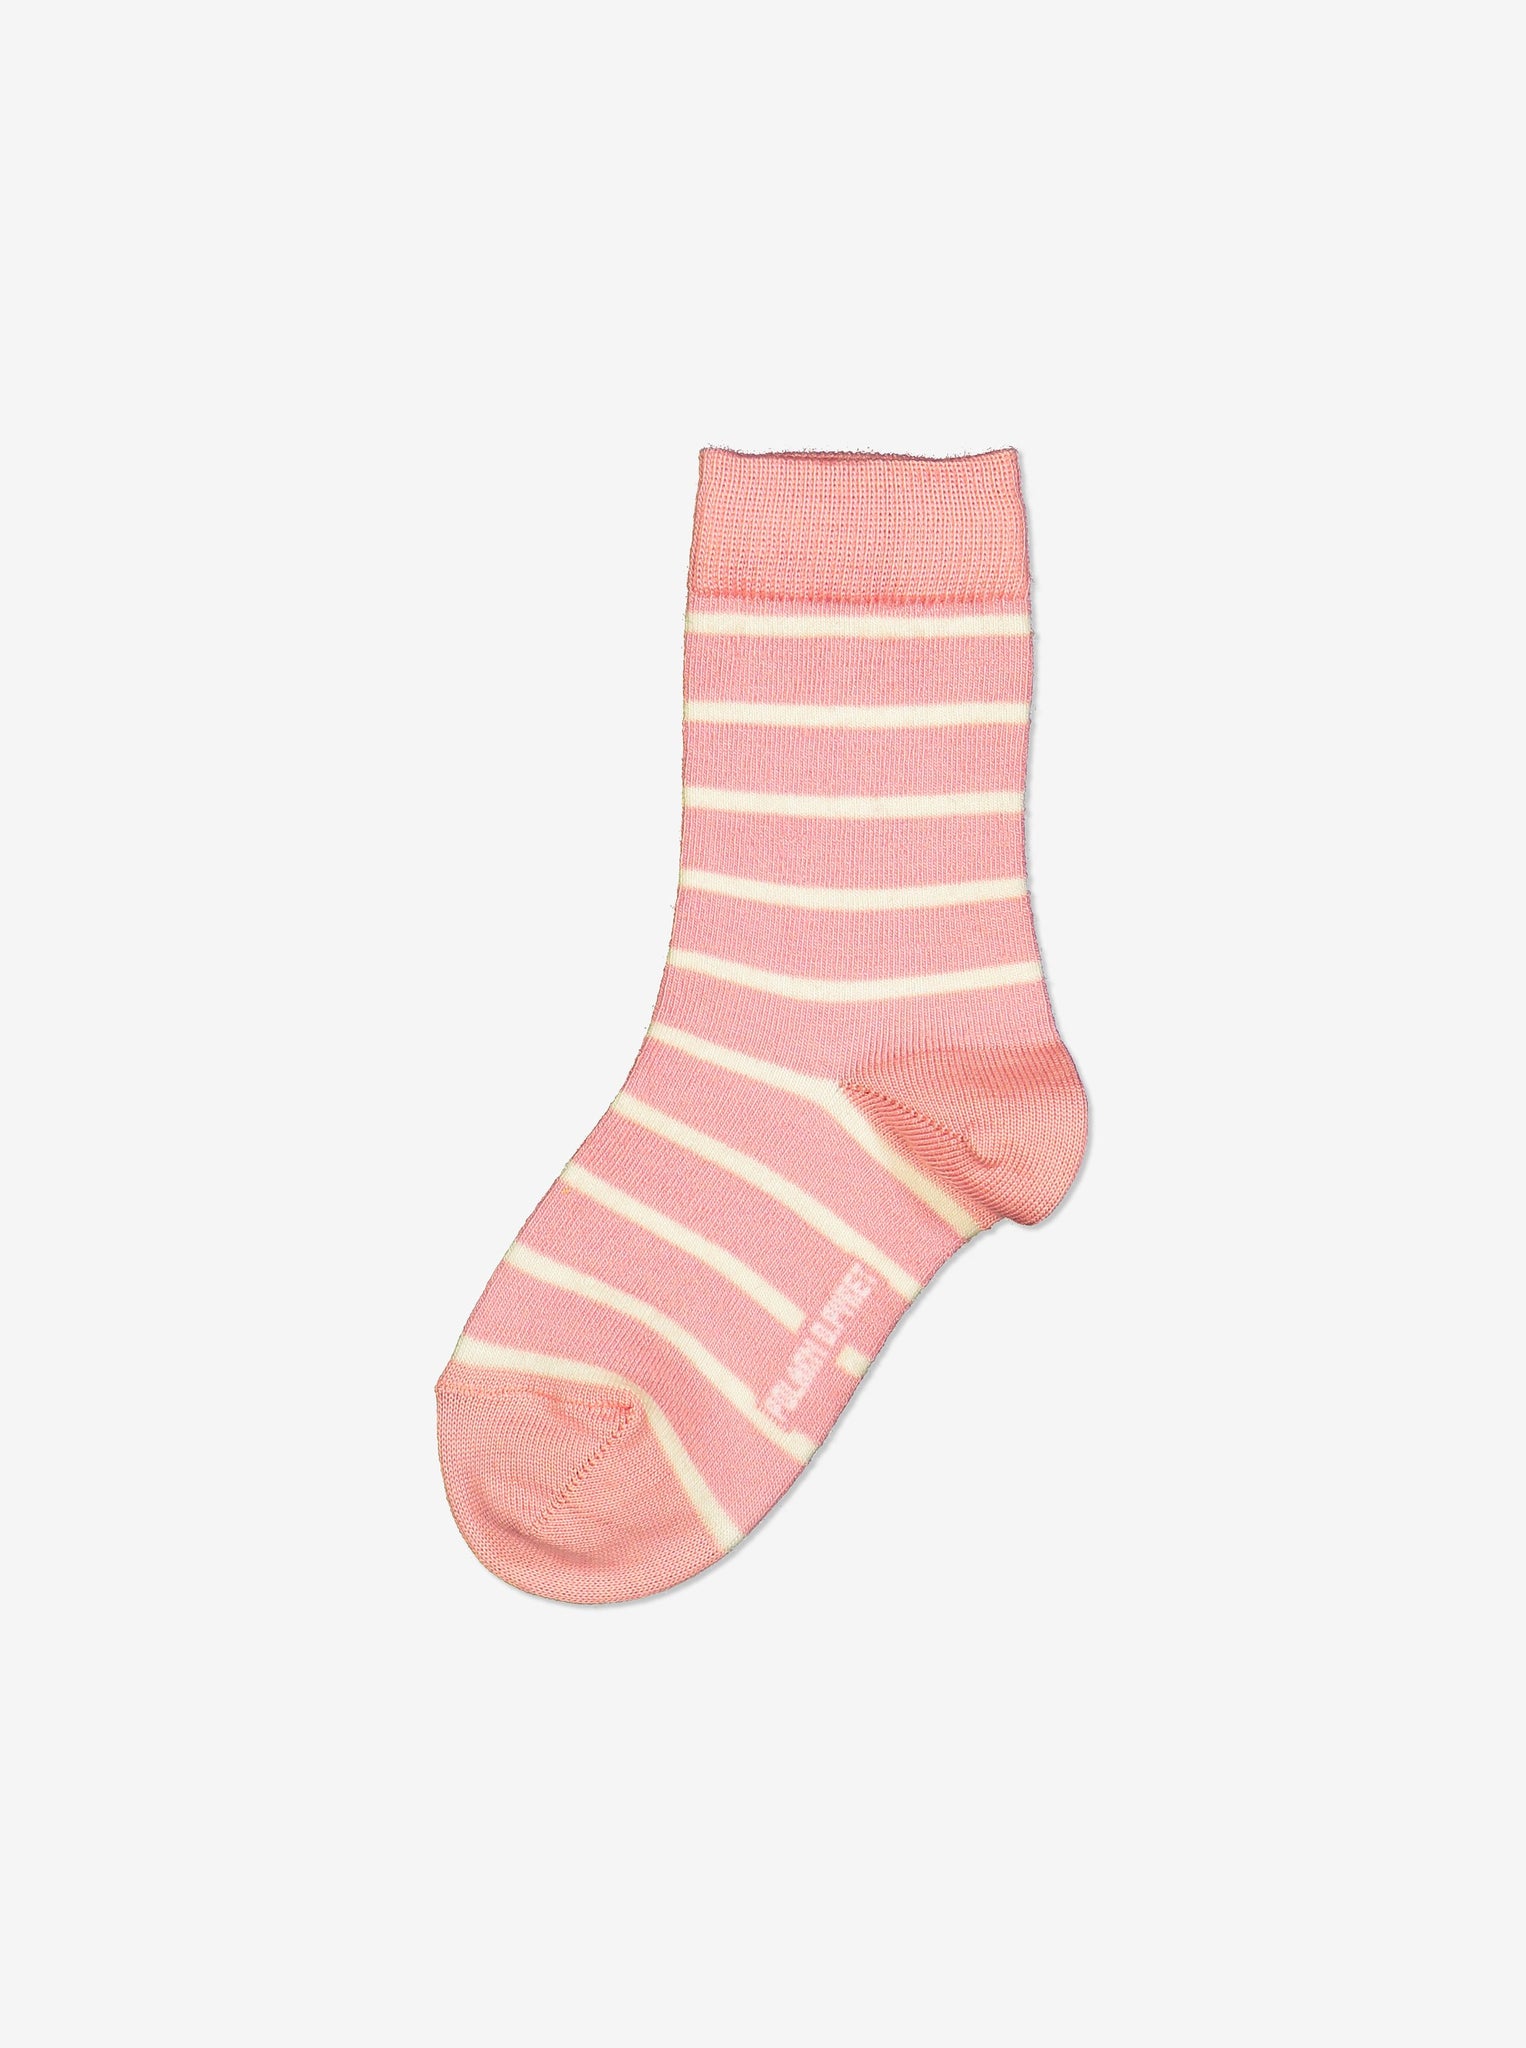 Striped Merino Kids Socks-Girl-4m-12y-Pink